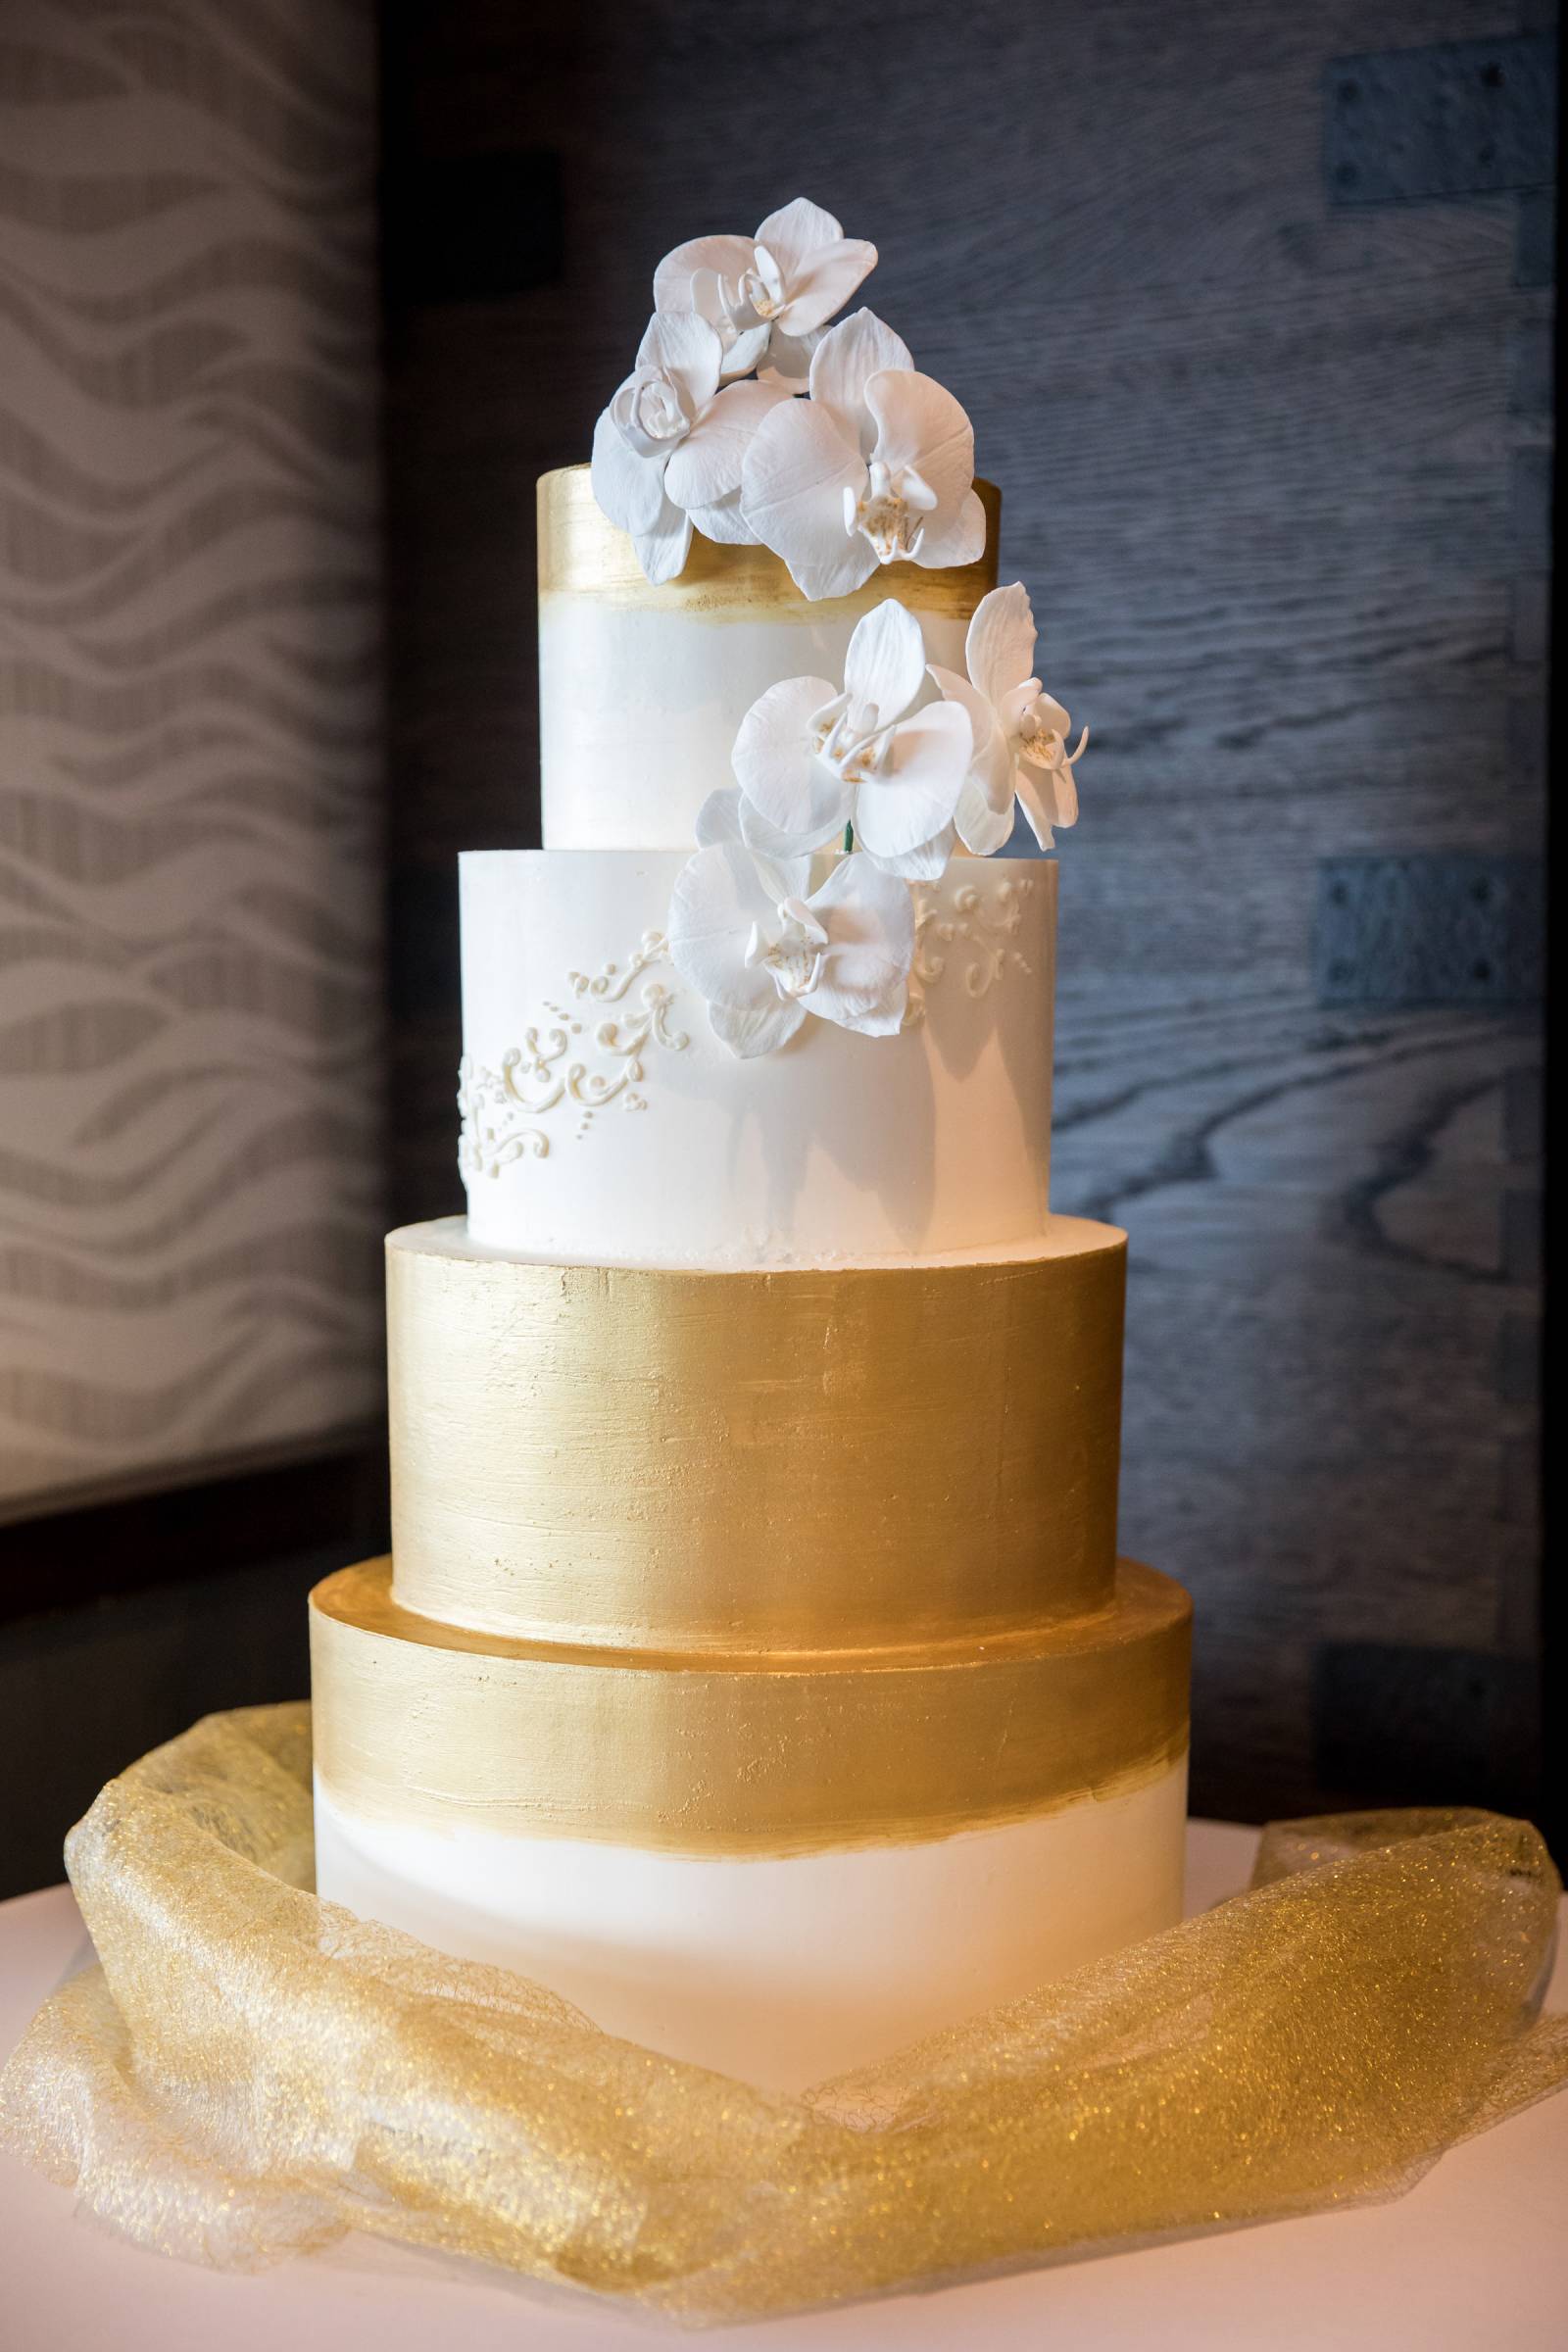 White and gold wedding cake, bridal wedding cake, contemporary wedding cake, Kake by Darci, Unique w